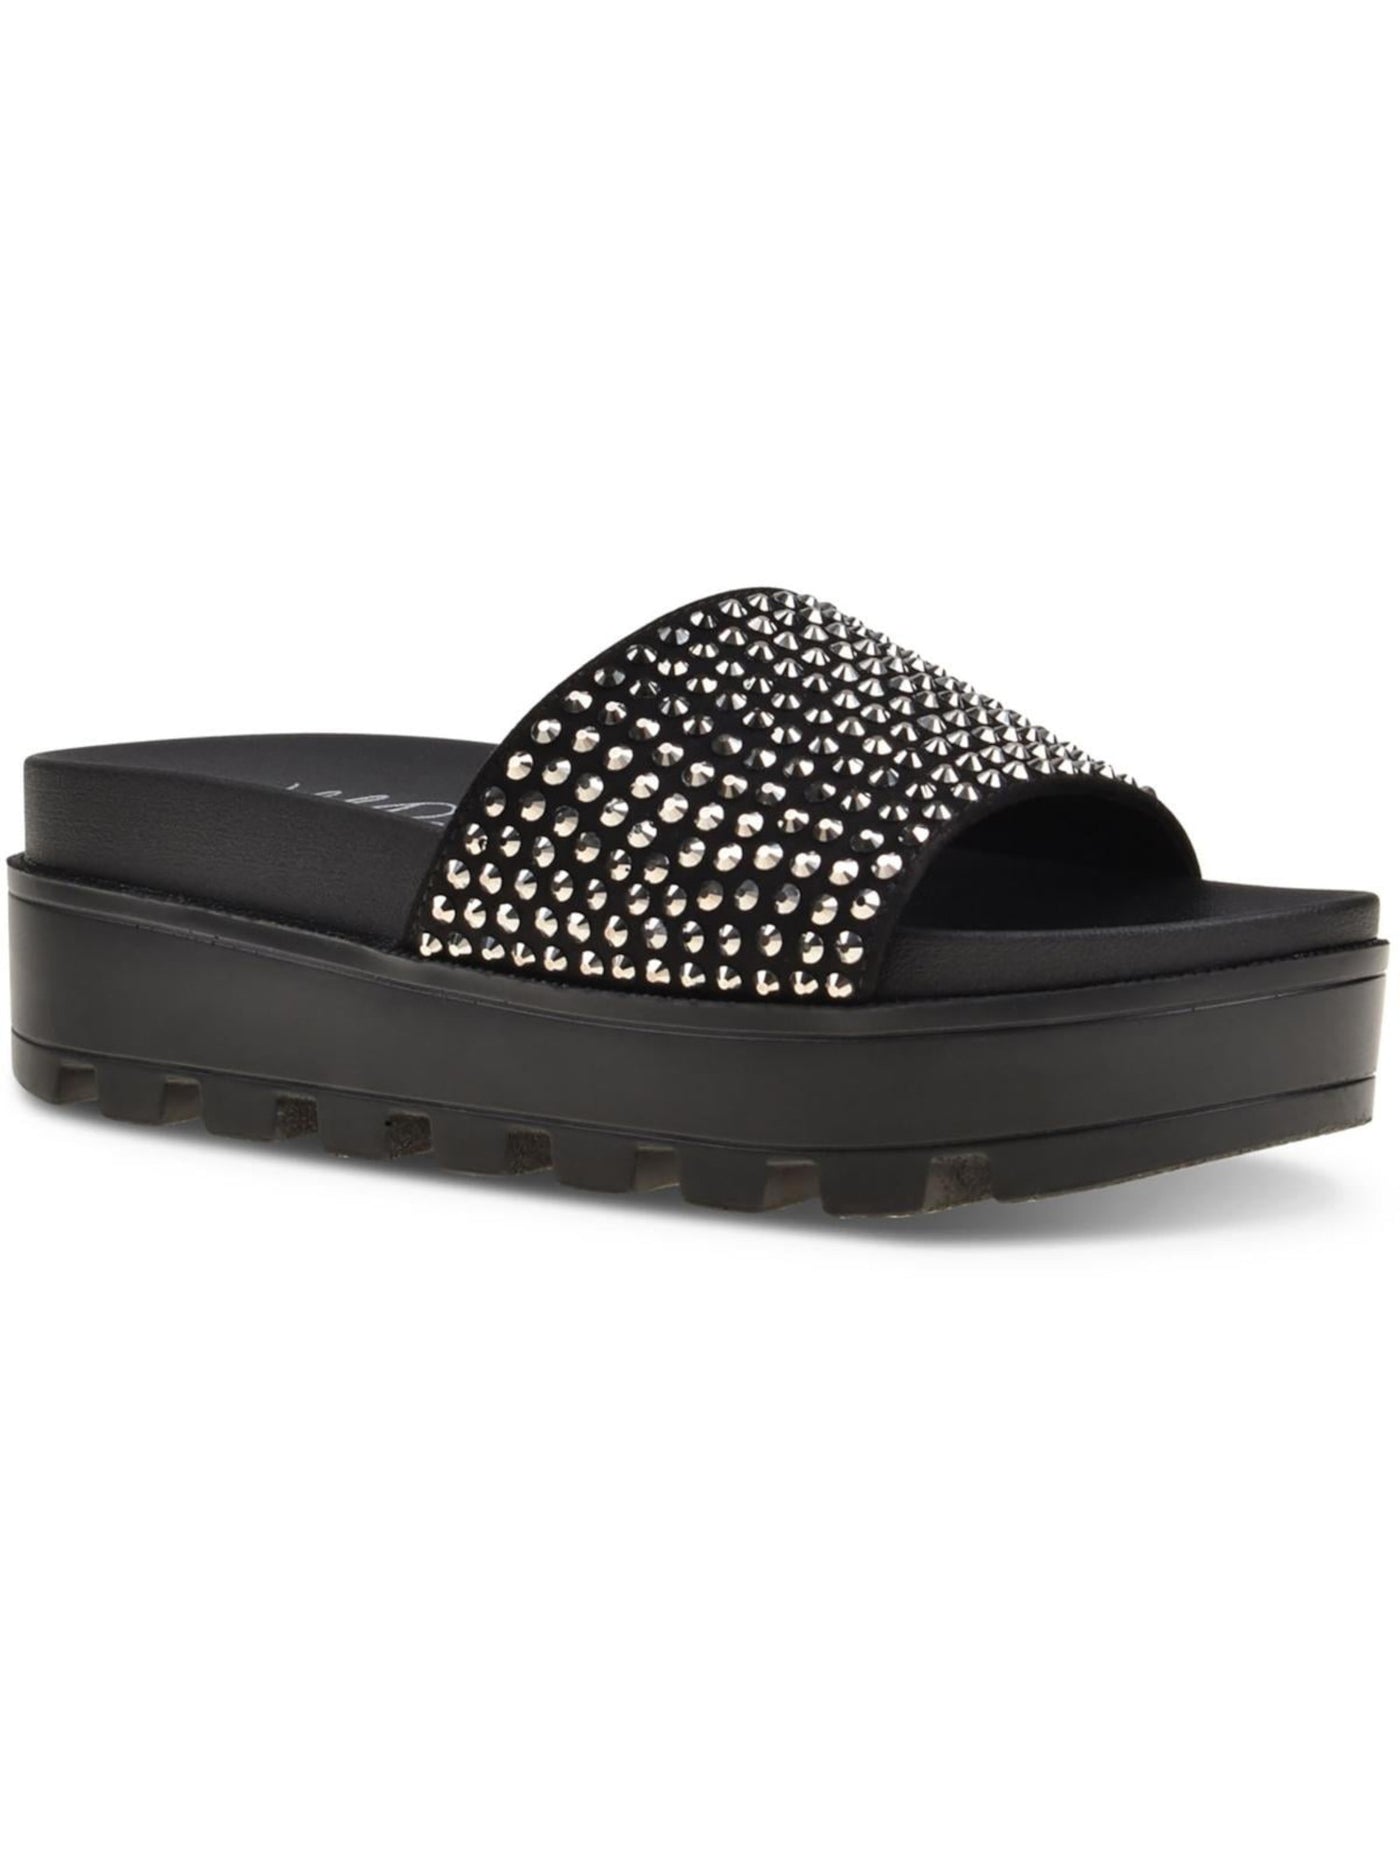 WILD PAIR Womens Black Rhinestone Comfort Elevated Round Toe Slip On Slide Sandals Shoes 8 M